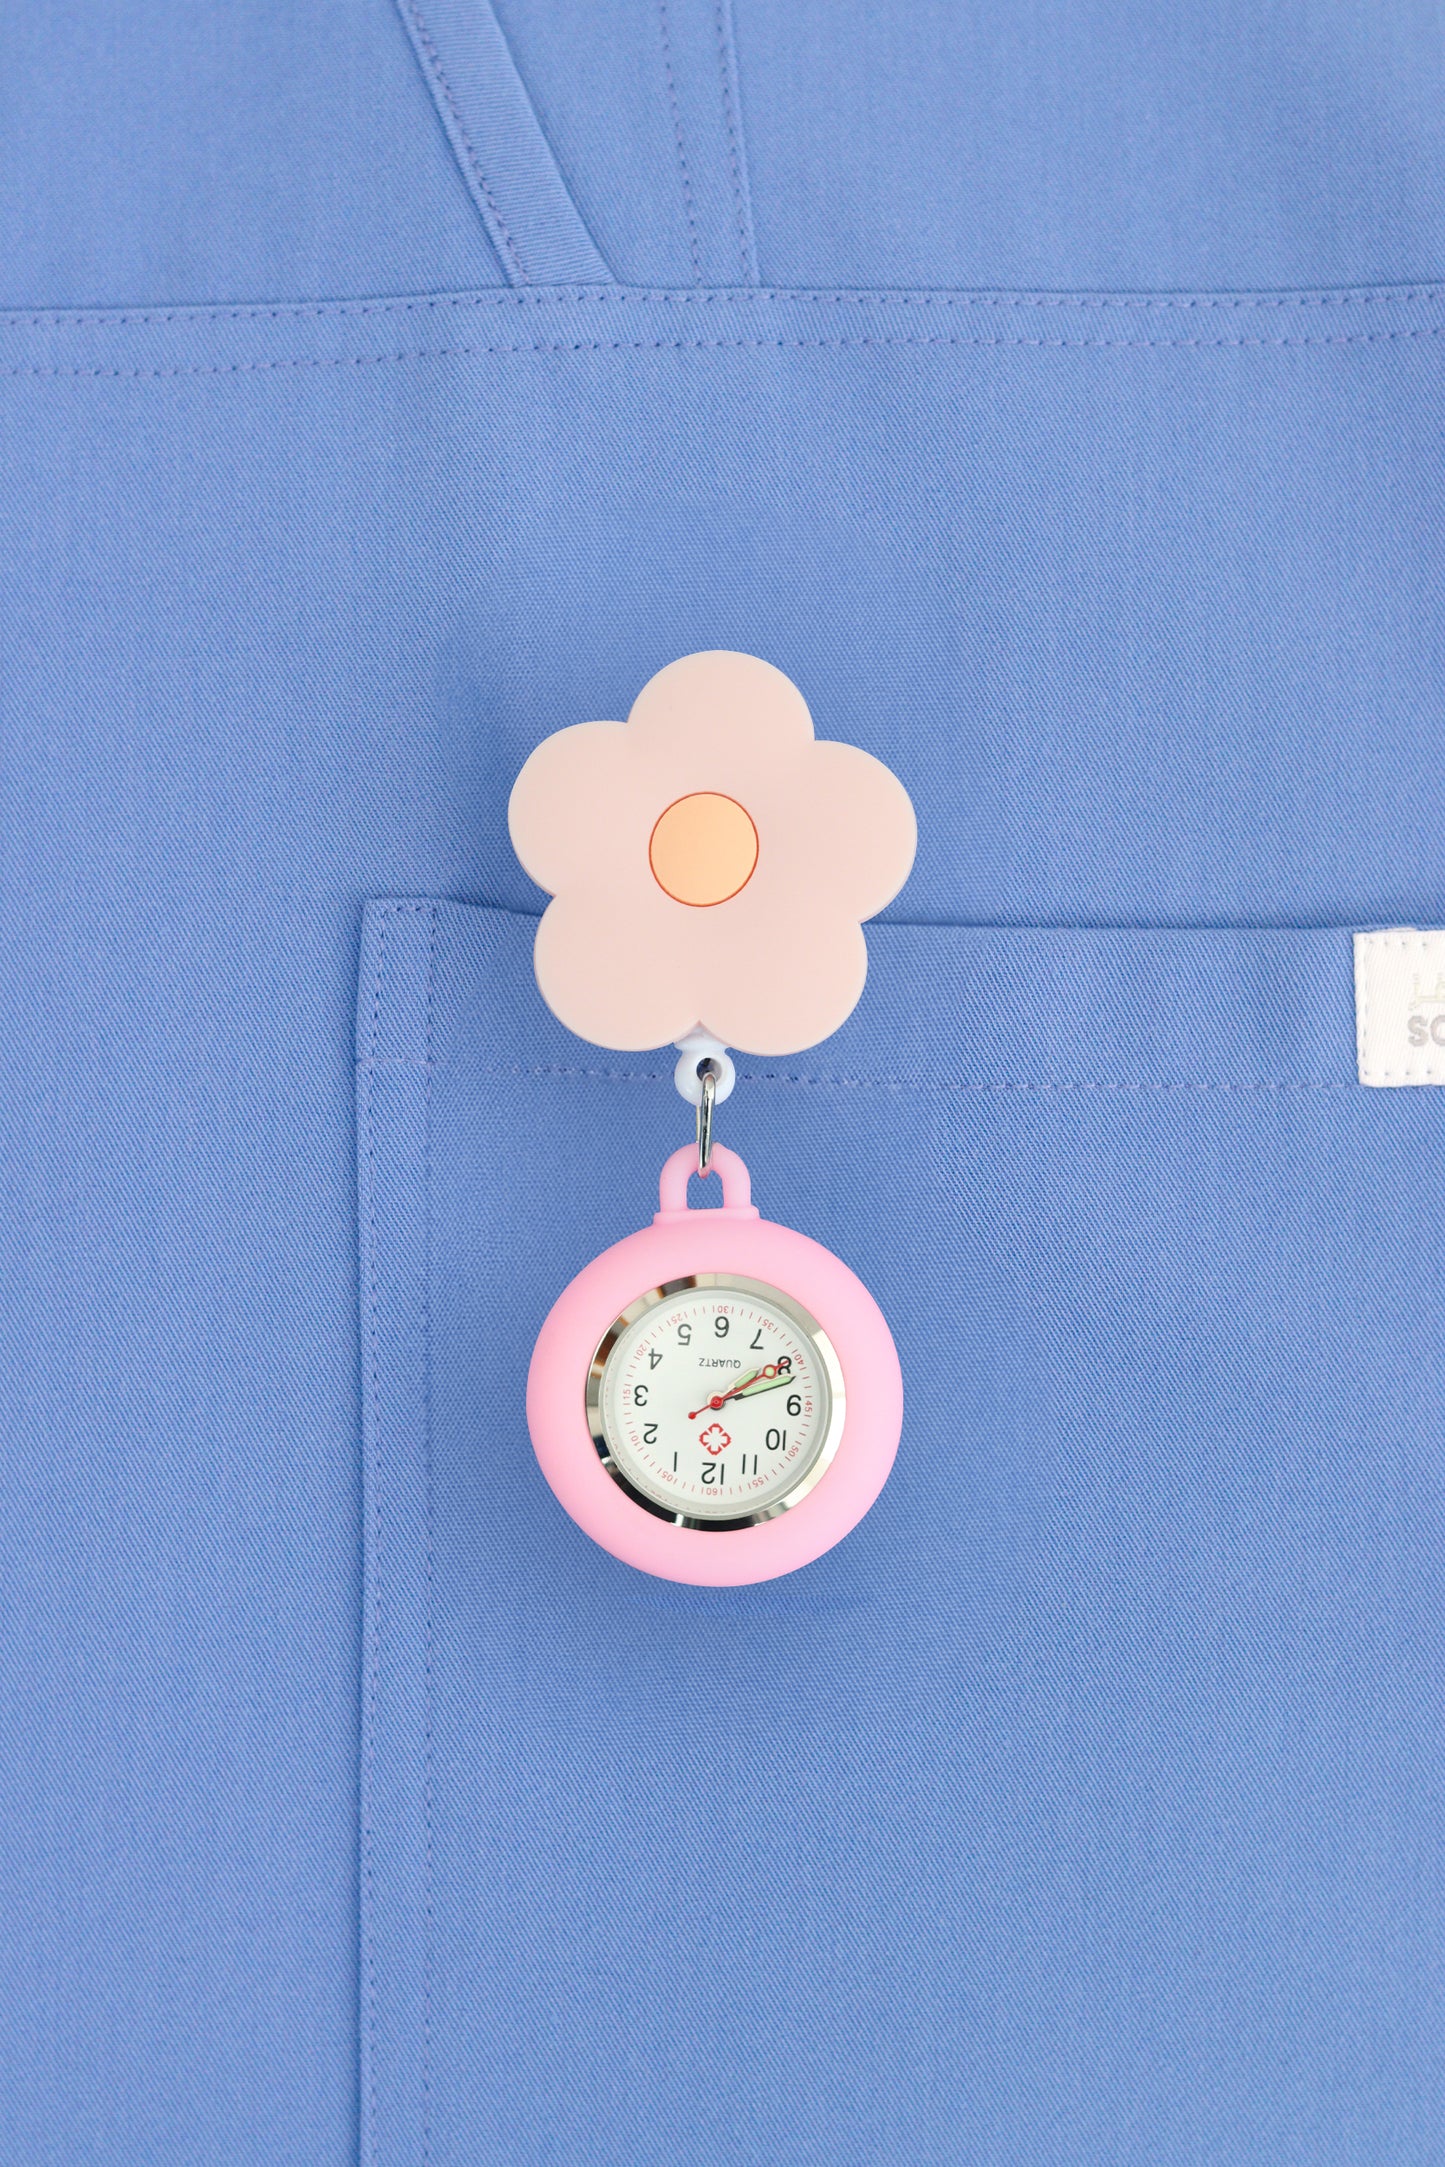 Nurse Pocket Silicon Fob Clip Watch - Flower